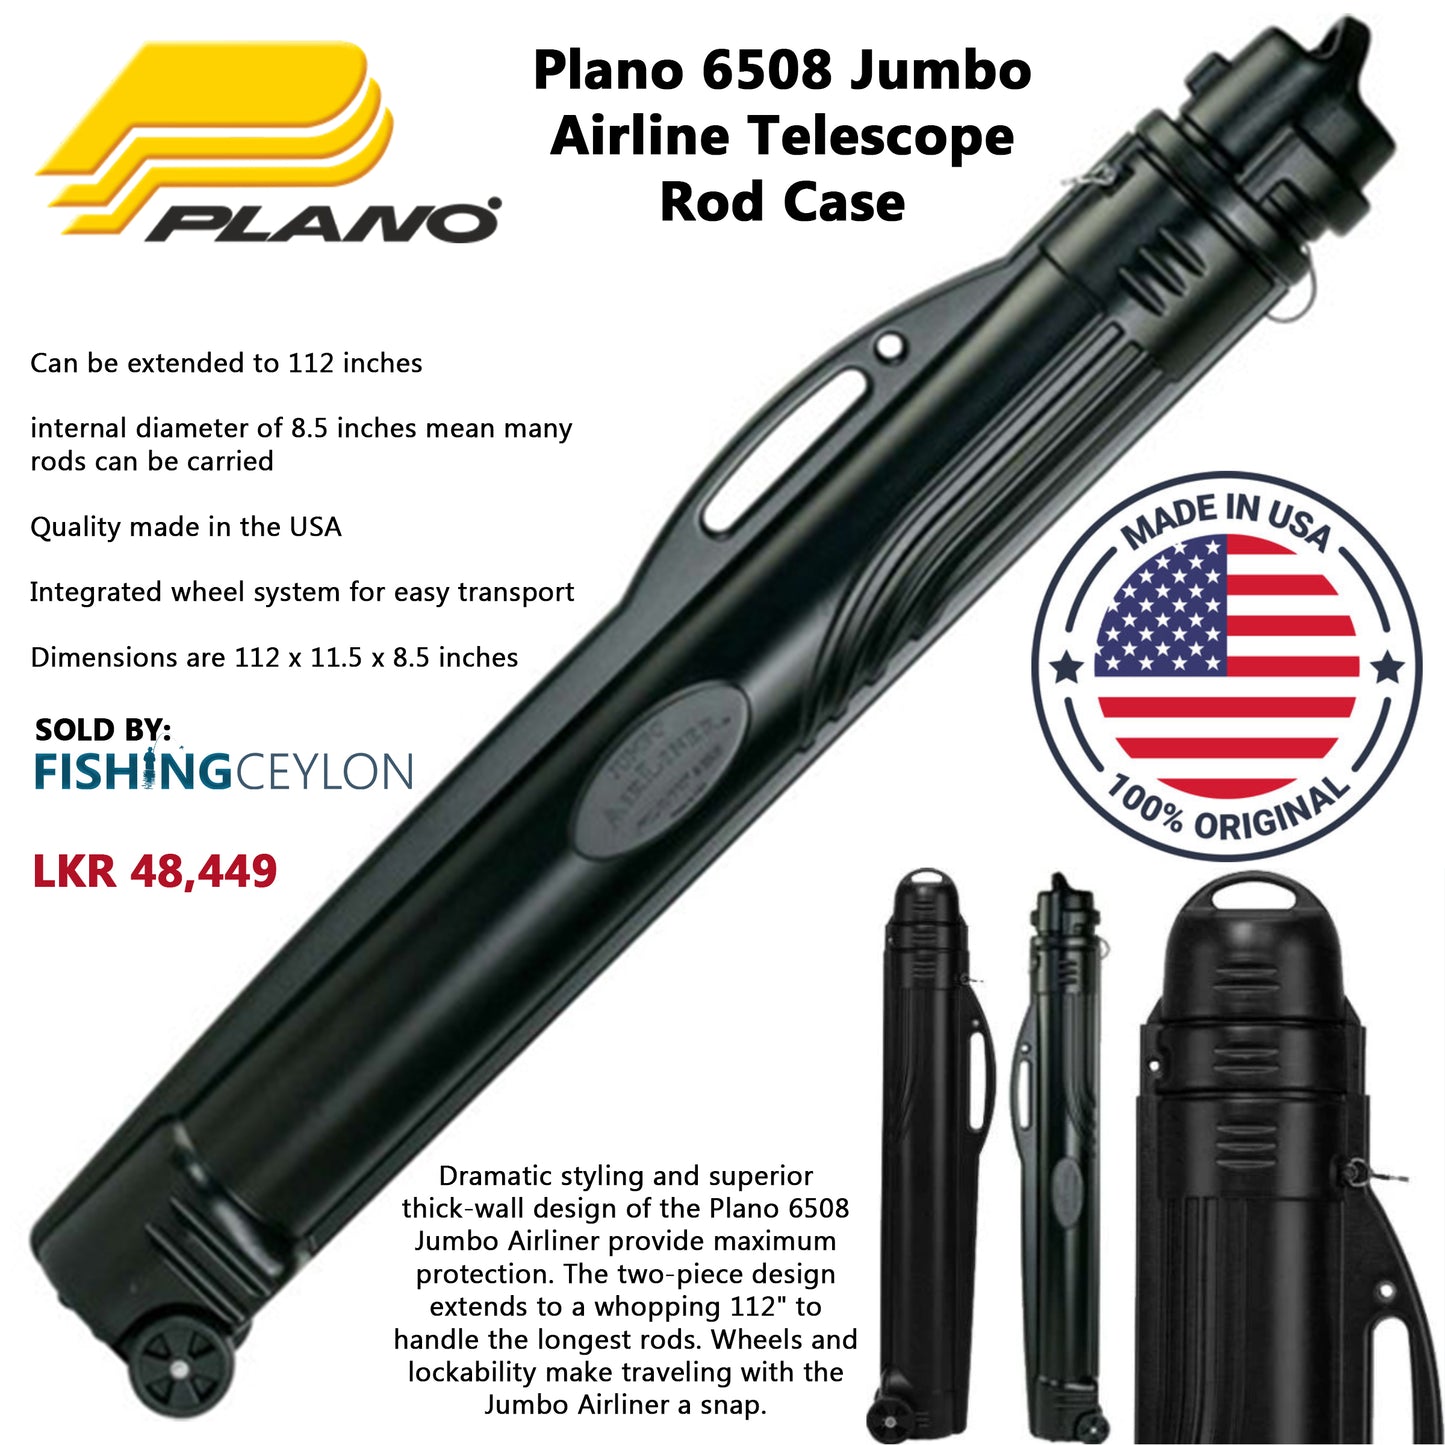 Plano 6508 Jumbo Airline Telescope Rod Case